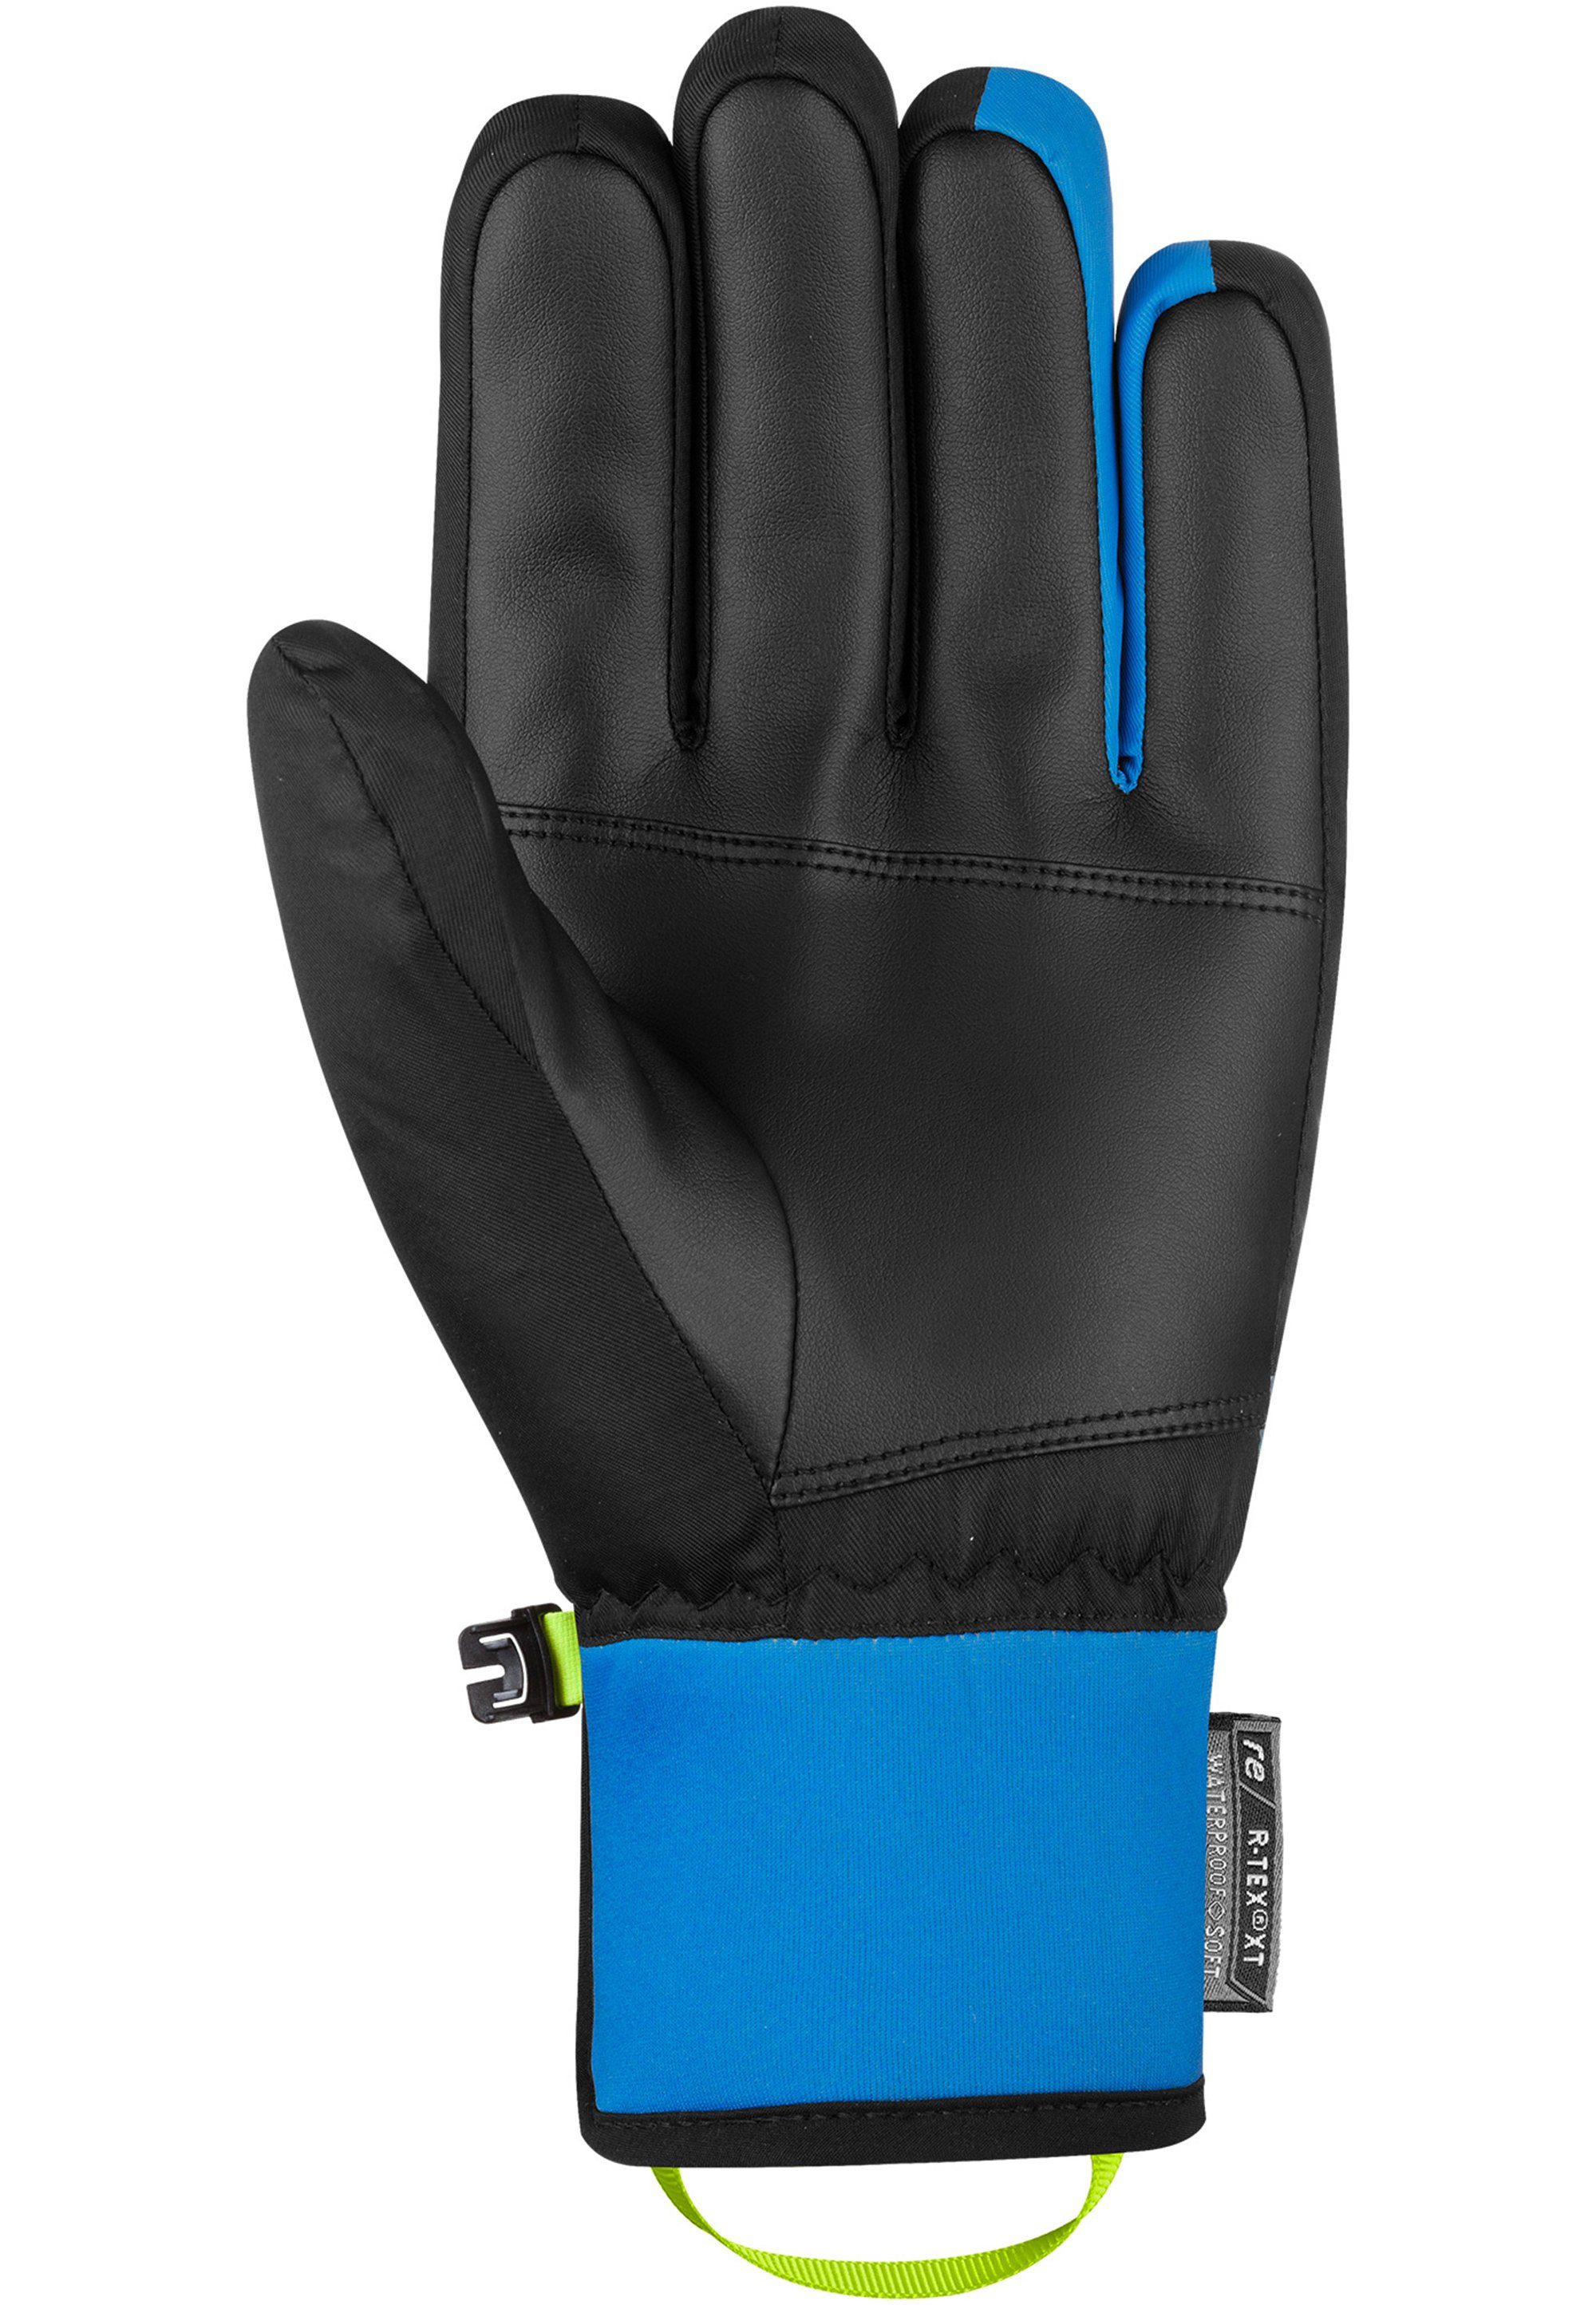 Reusch Skihandschuhe Venom Material aus XT R-TEX® und schwarz-blau atmungsaktivem wasserdichtem